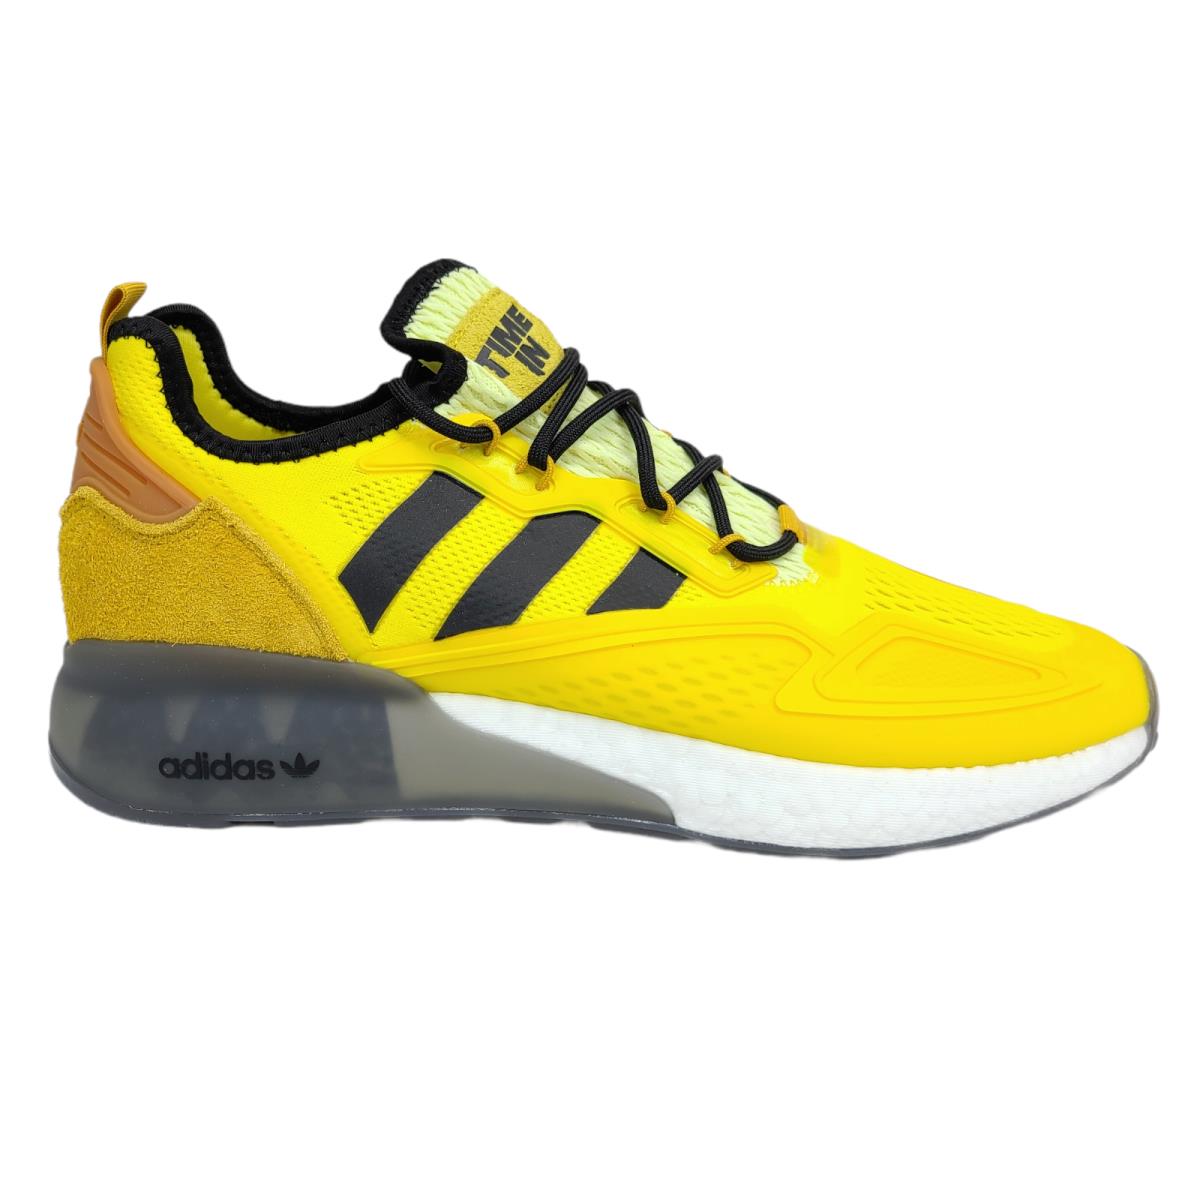 Ninja Adidas Originals Mens 12.5 14 ZX 2K Boost Yellow Shoes FZ1882